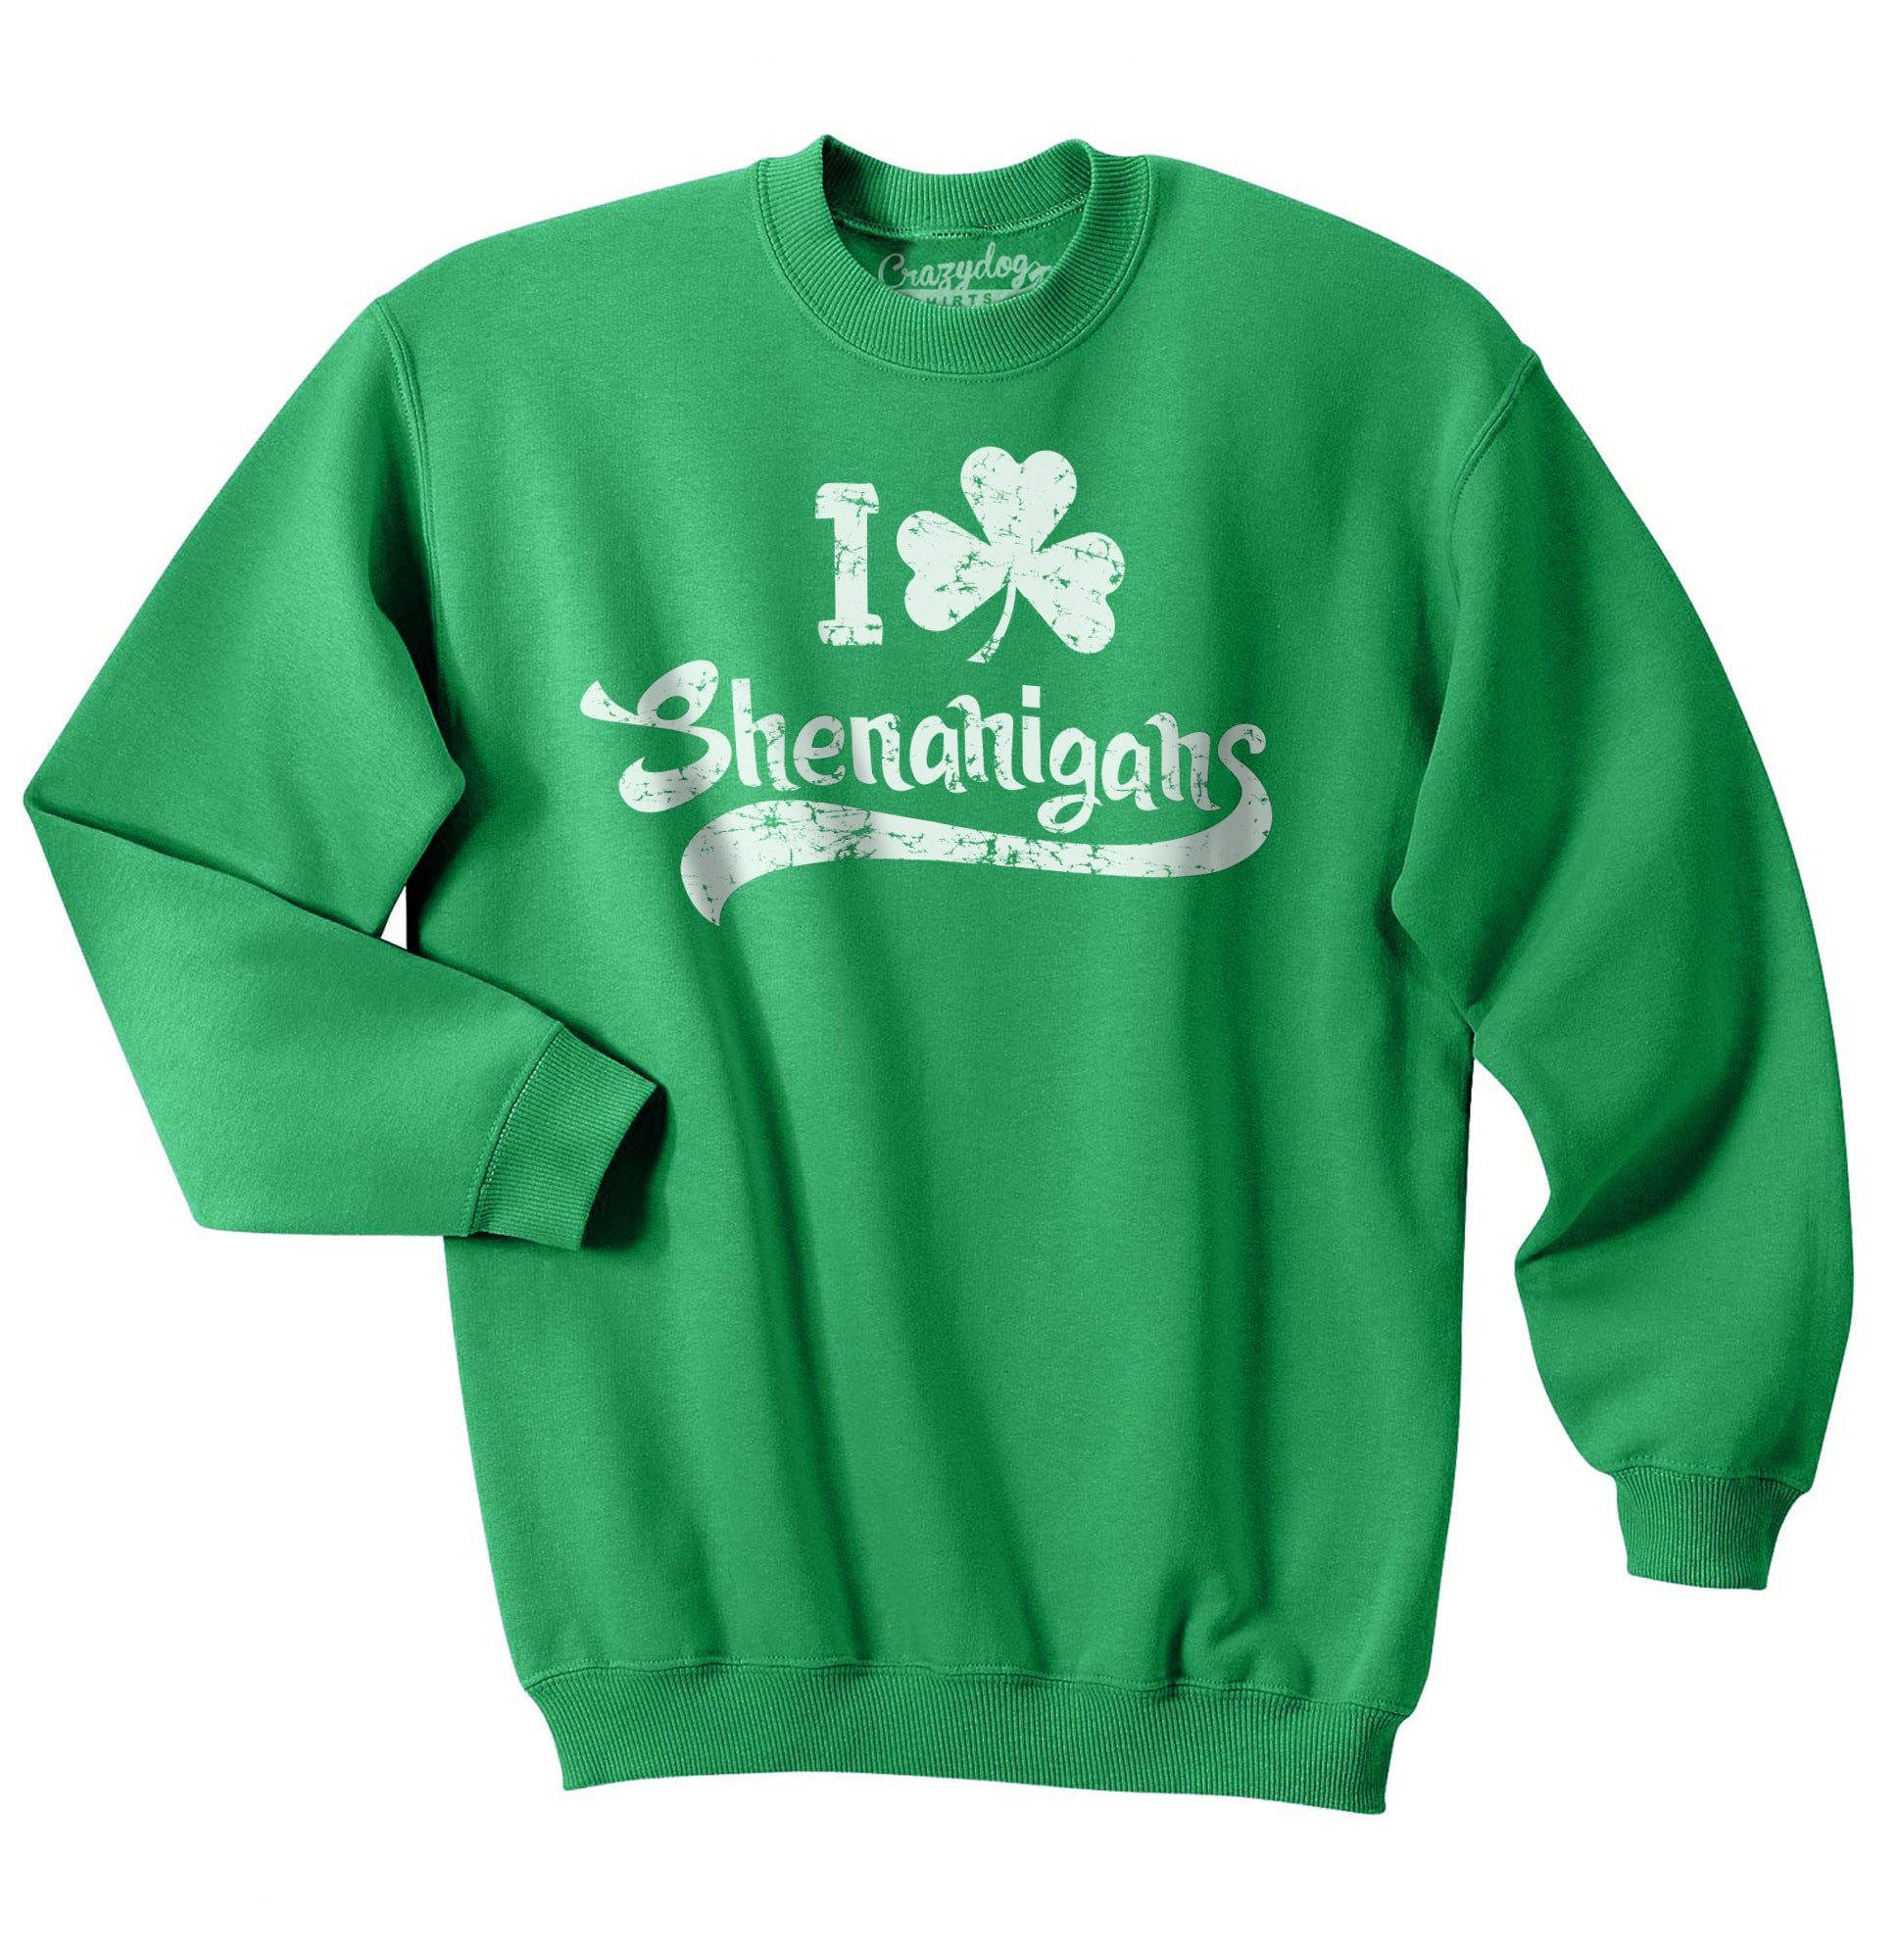 Funny Green I Clover Shenanigans Sweatshirt Nerdy Saint Patrick's Day Drinking Tee